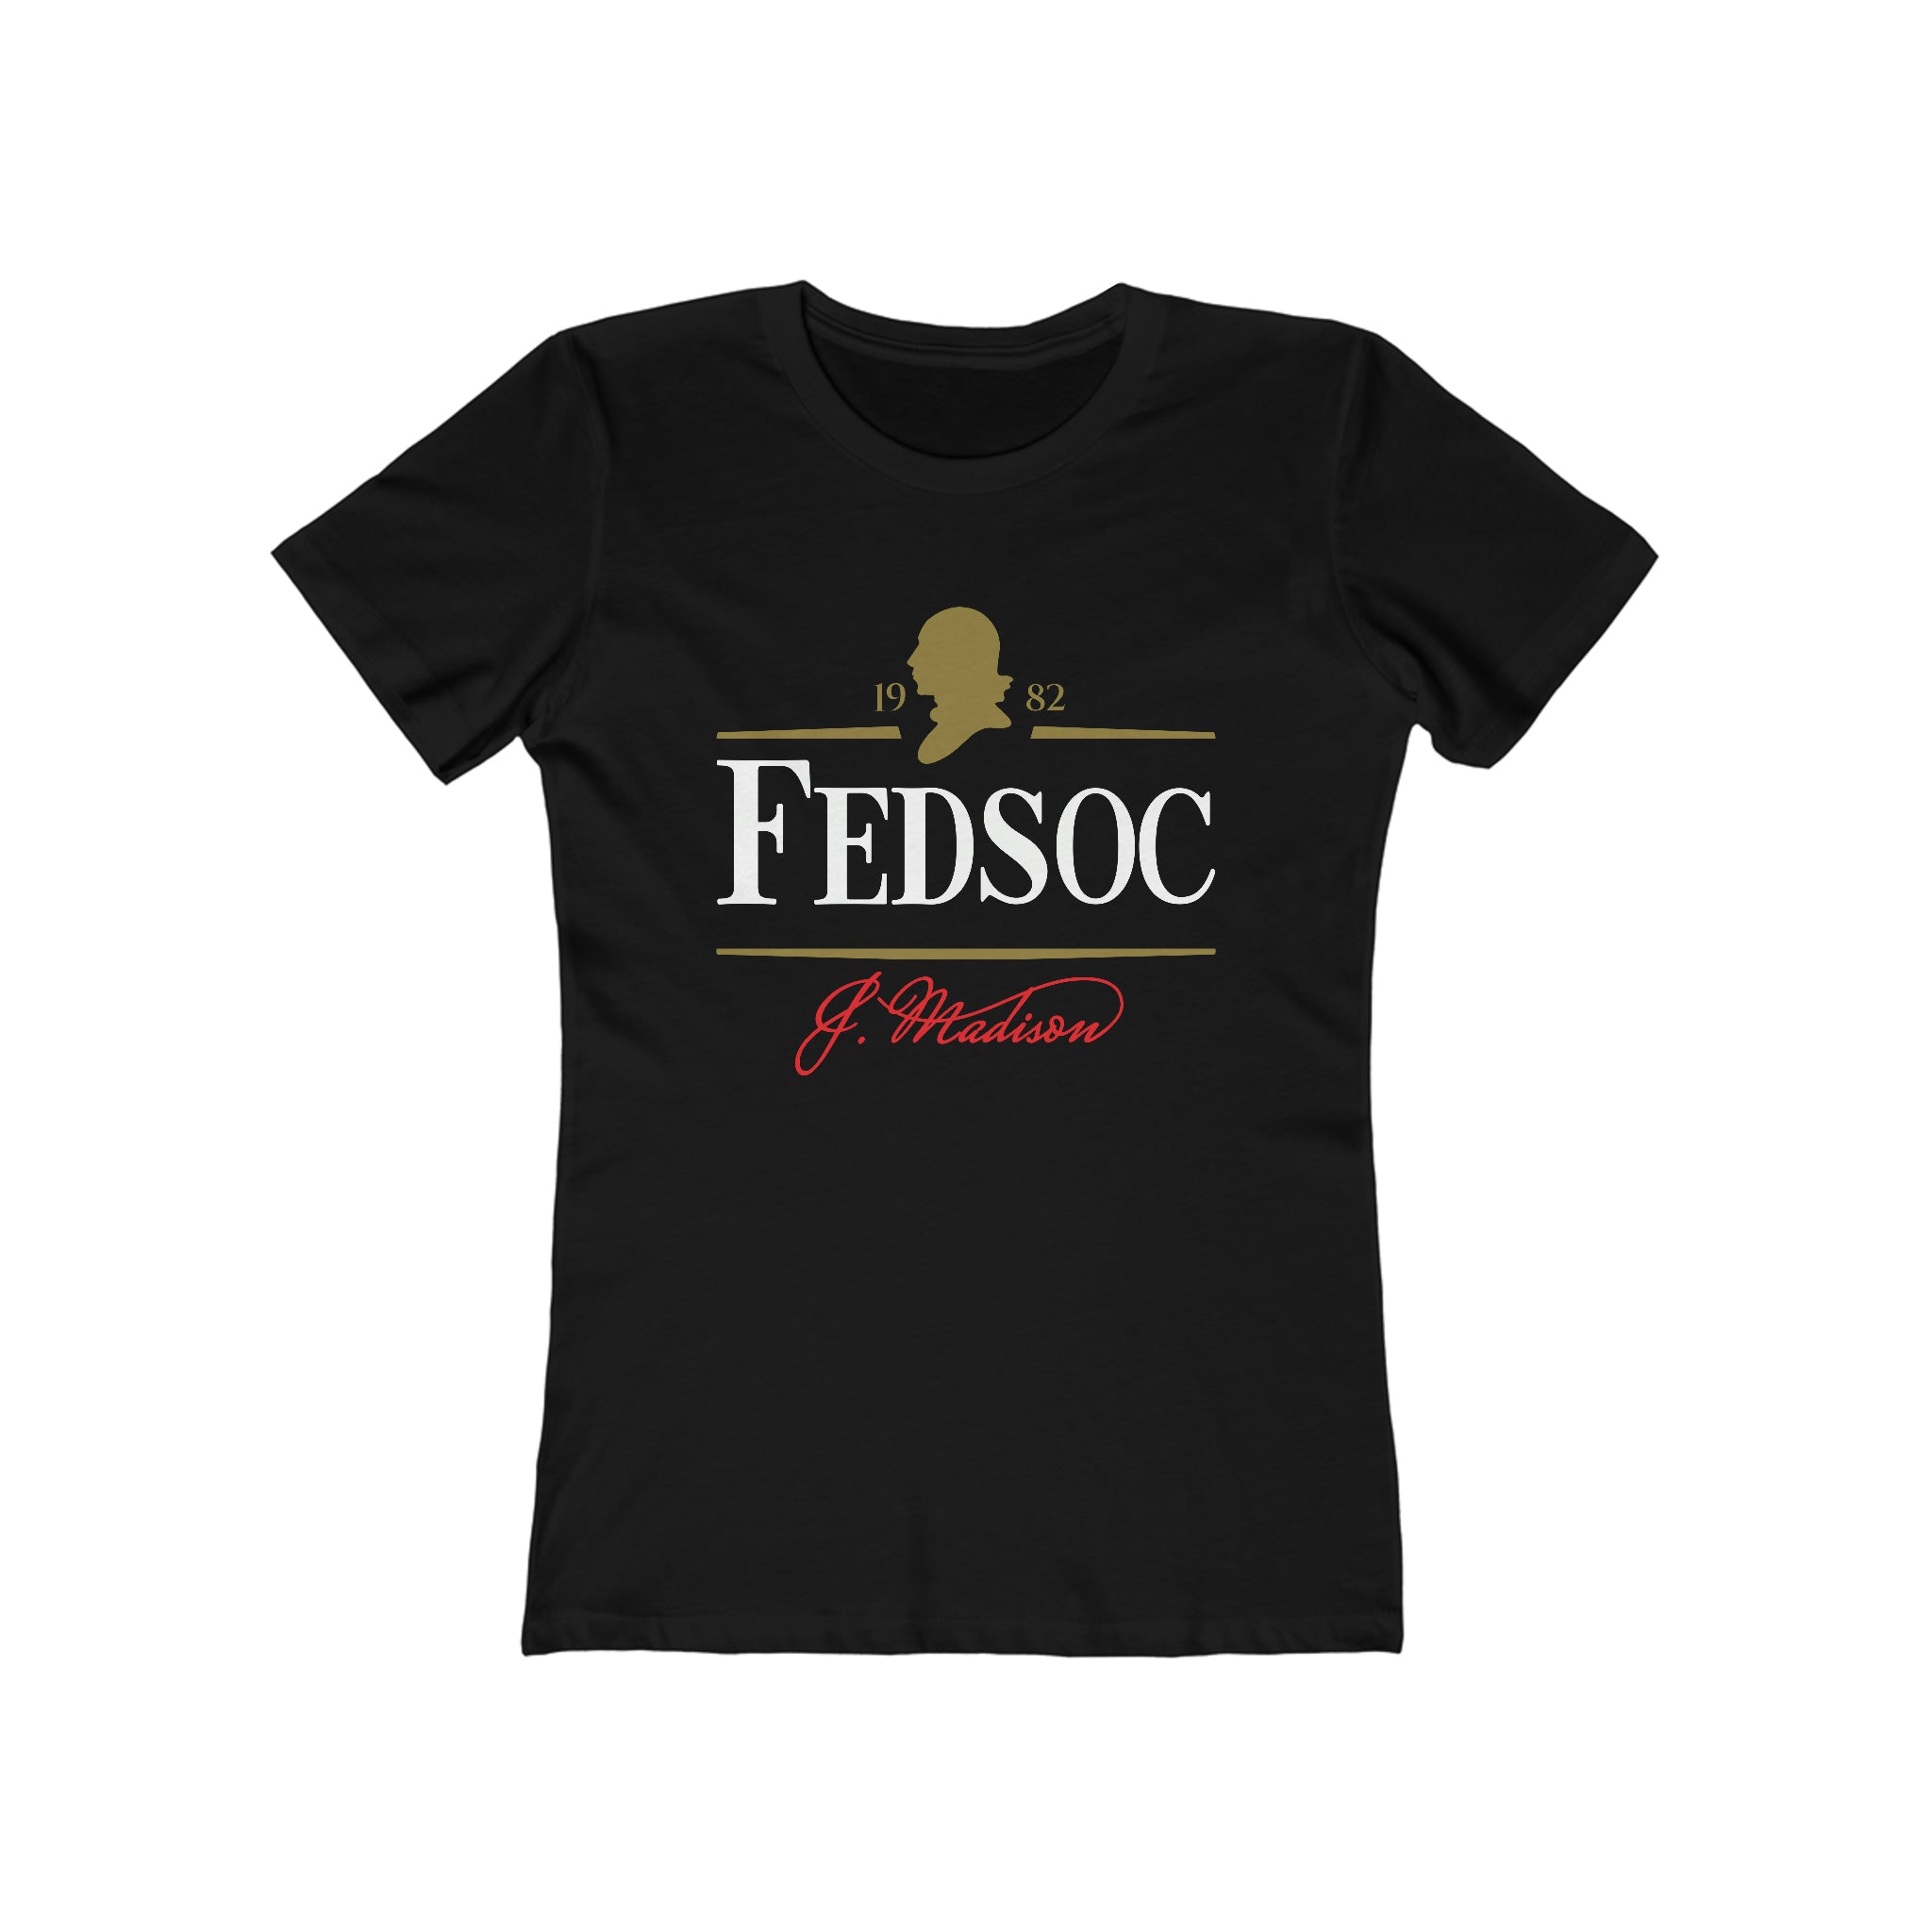 Pub Shirt Women's Shirt (Fed Soc)